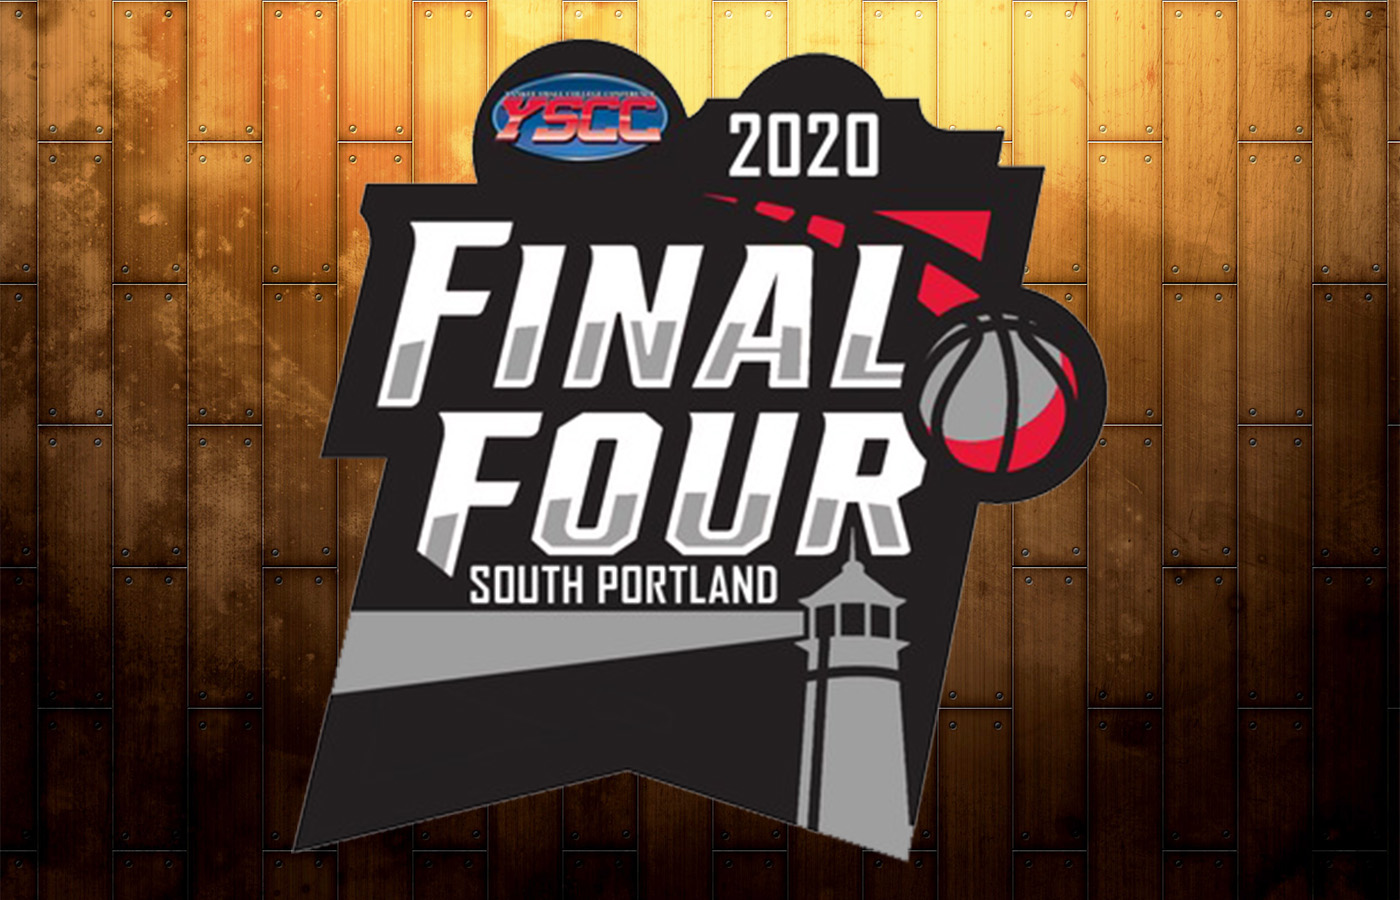 2020 YSCC Final Four Basketball Championships Info